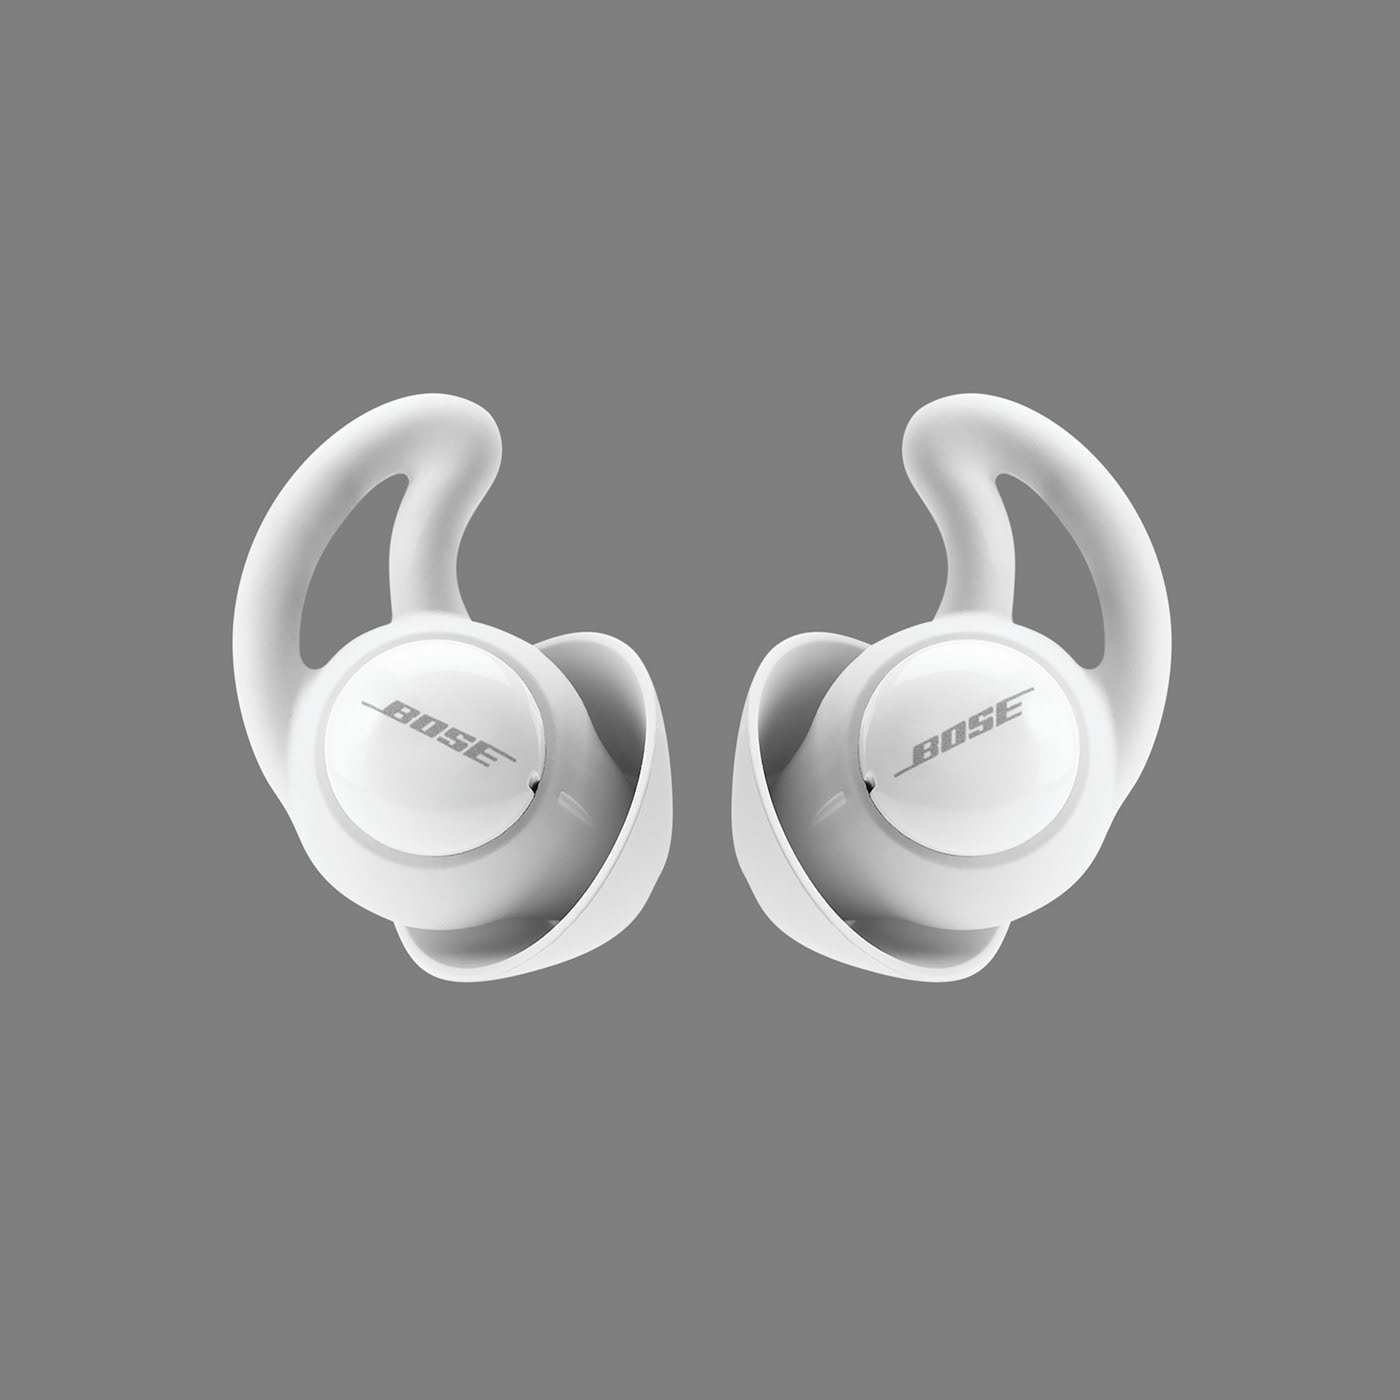 Bose earphones industrial design  product sleep sleeper buds sound